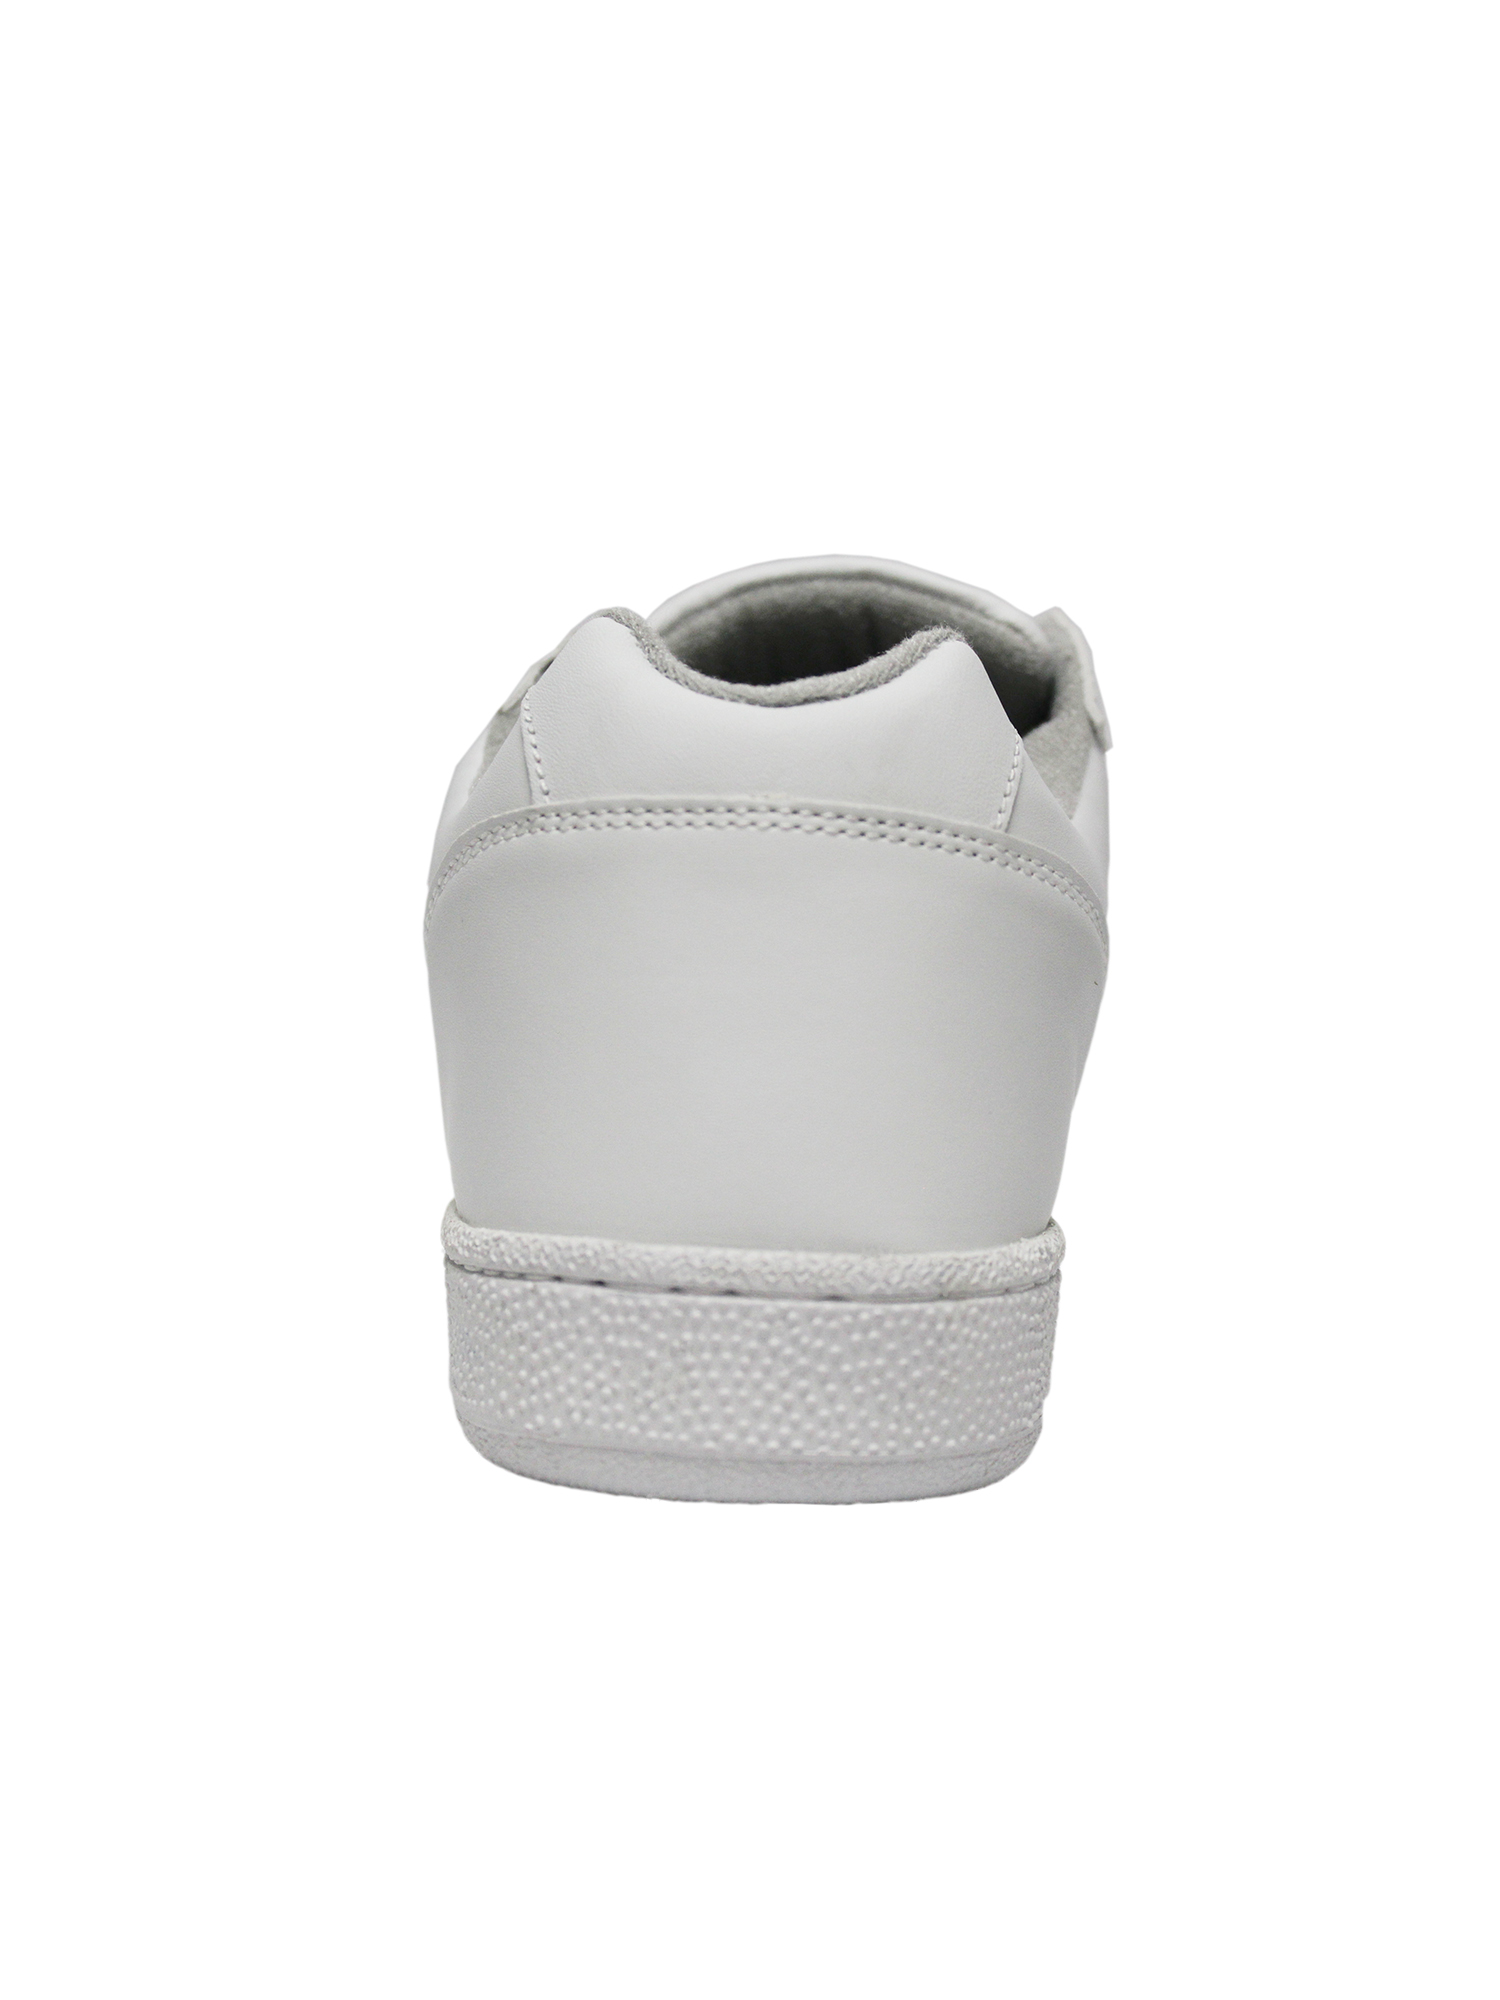 Tanleewa Men's Leather Strap Sneakers Lightweight Hook and Loop Walking Shoe Size 8 Adult Male - image 5 of 5